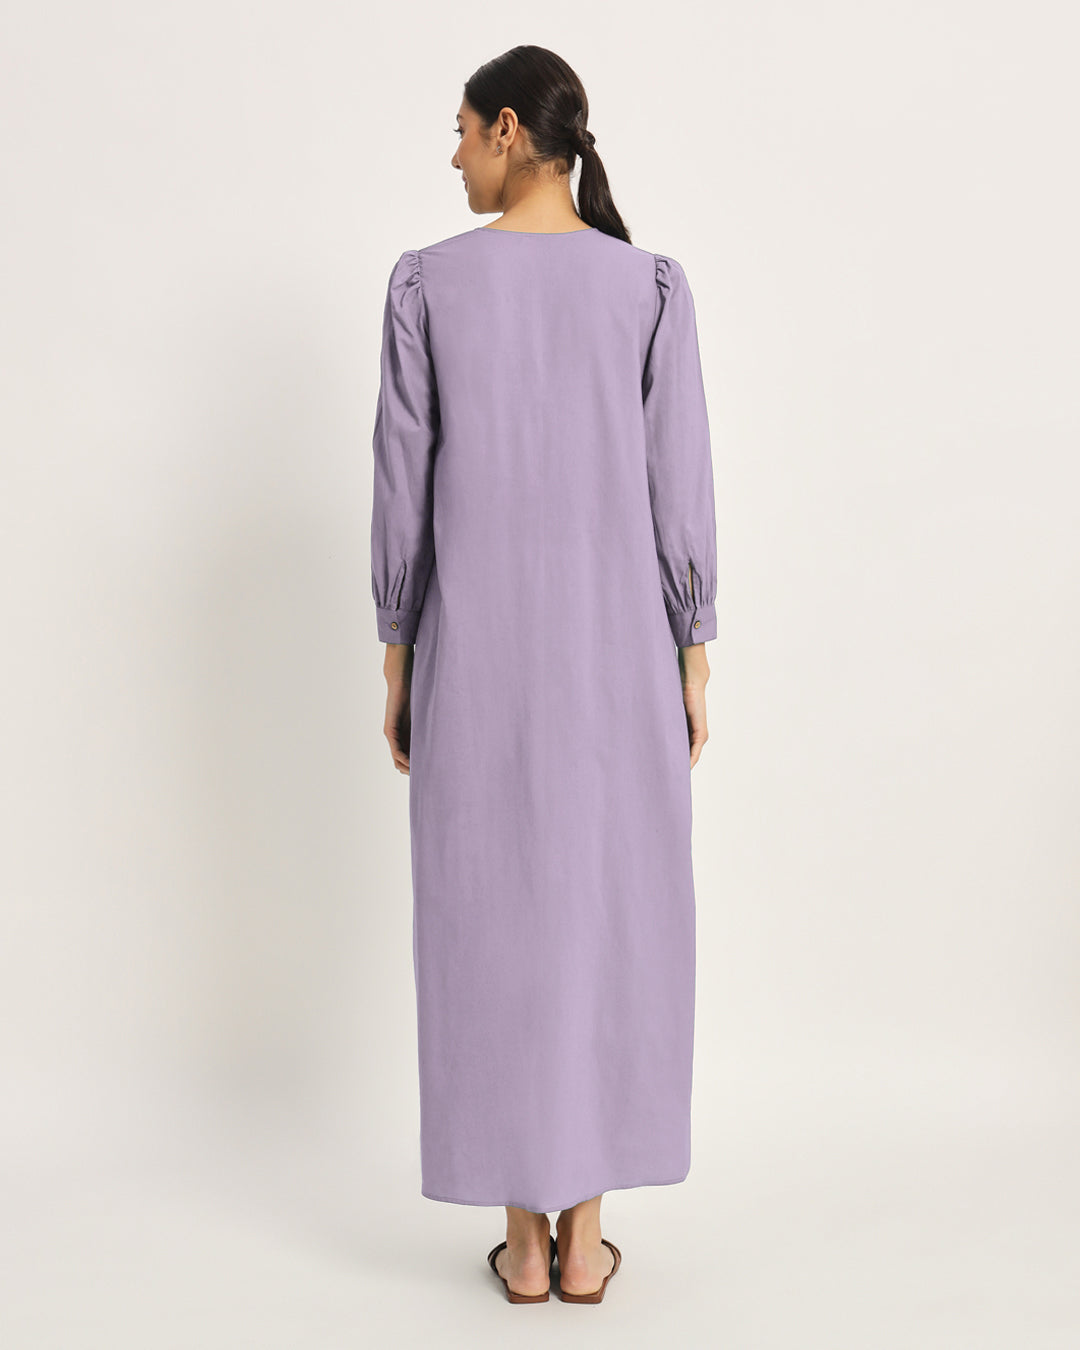 Combo: Lilac & Wisteria Purple Belly Blossom Maternity & Nursing Dress-Set of 2